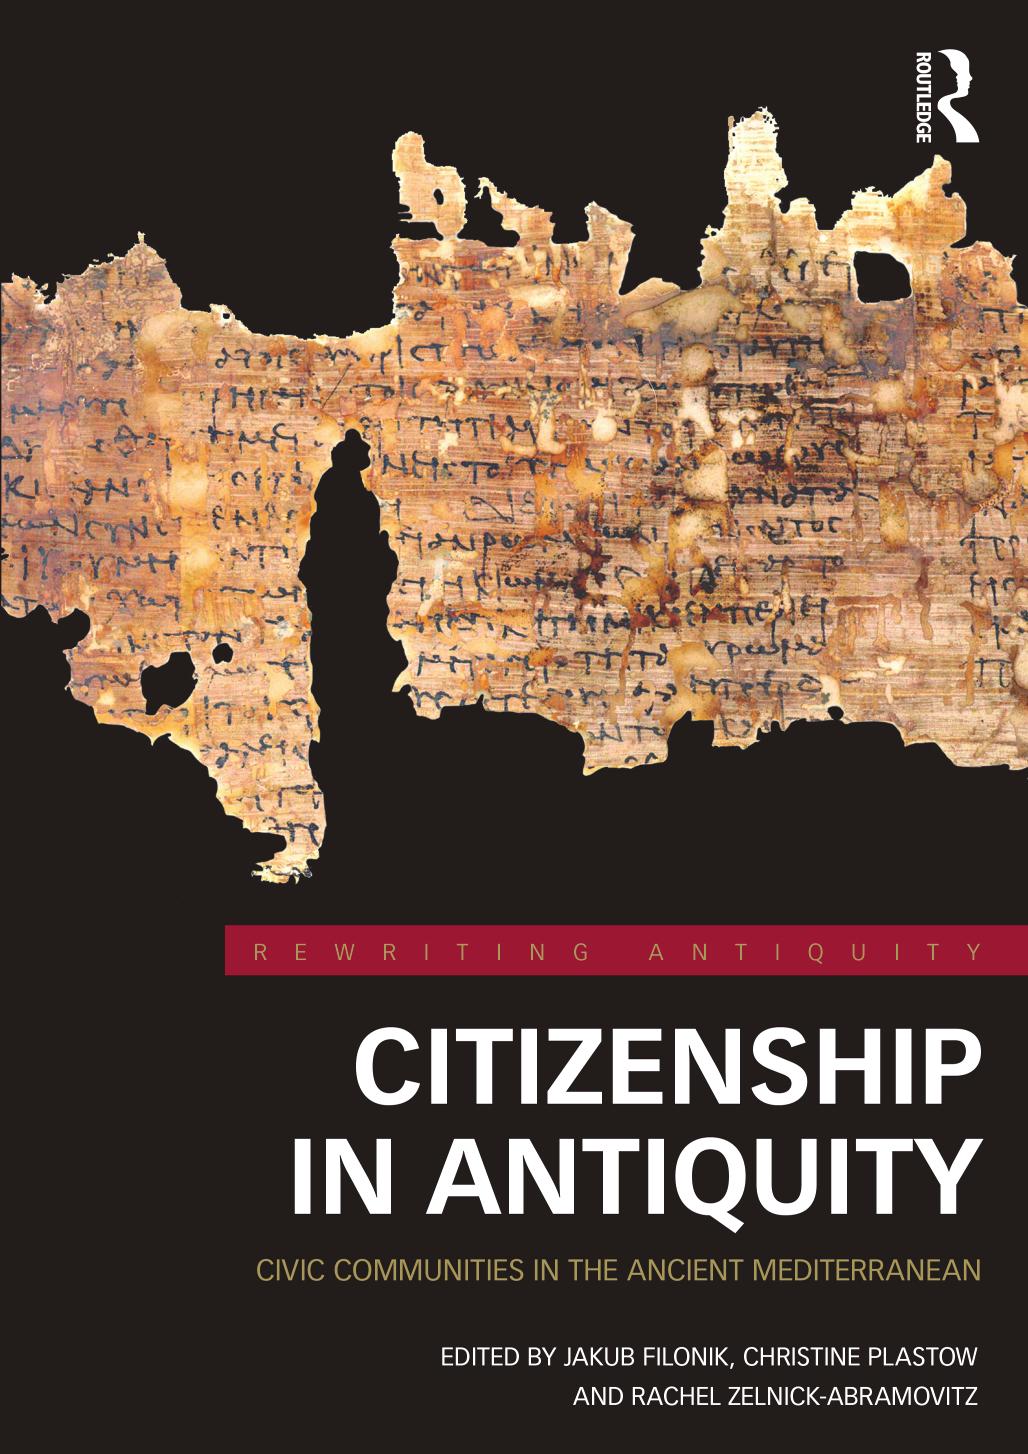 Citizenship in Antiquity: Civic Communities in the Ancient Mediterranean by Jakub Filonik; Christine Plastow; Rachel Zelnick-Abramovitz